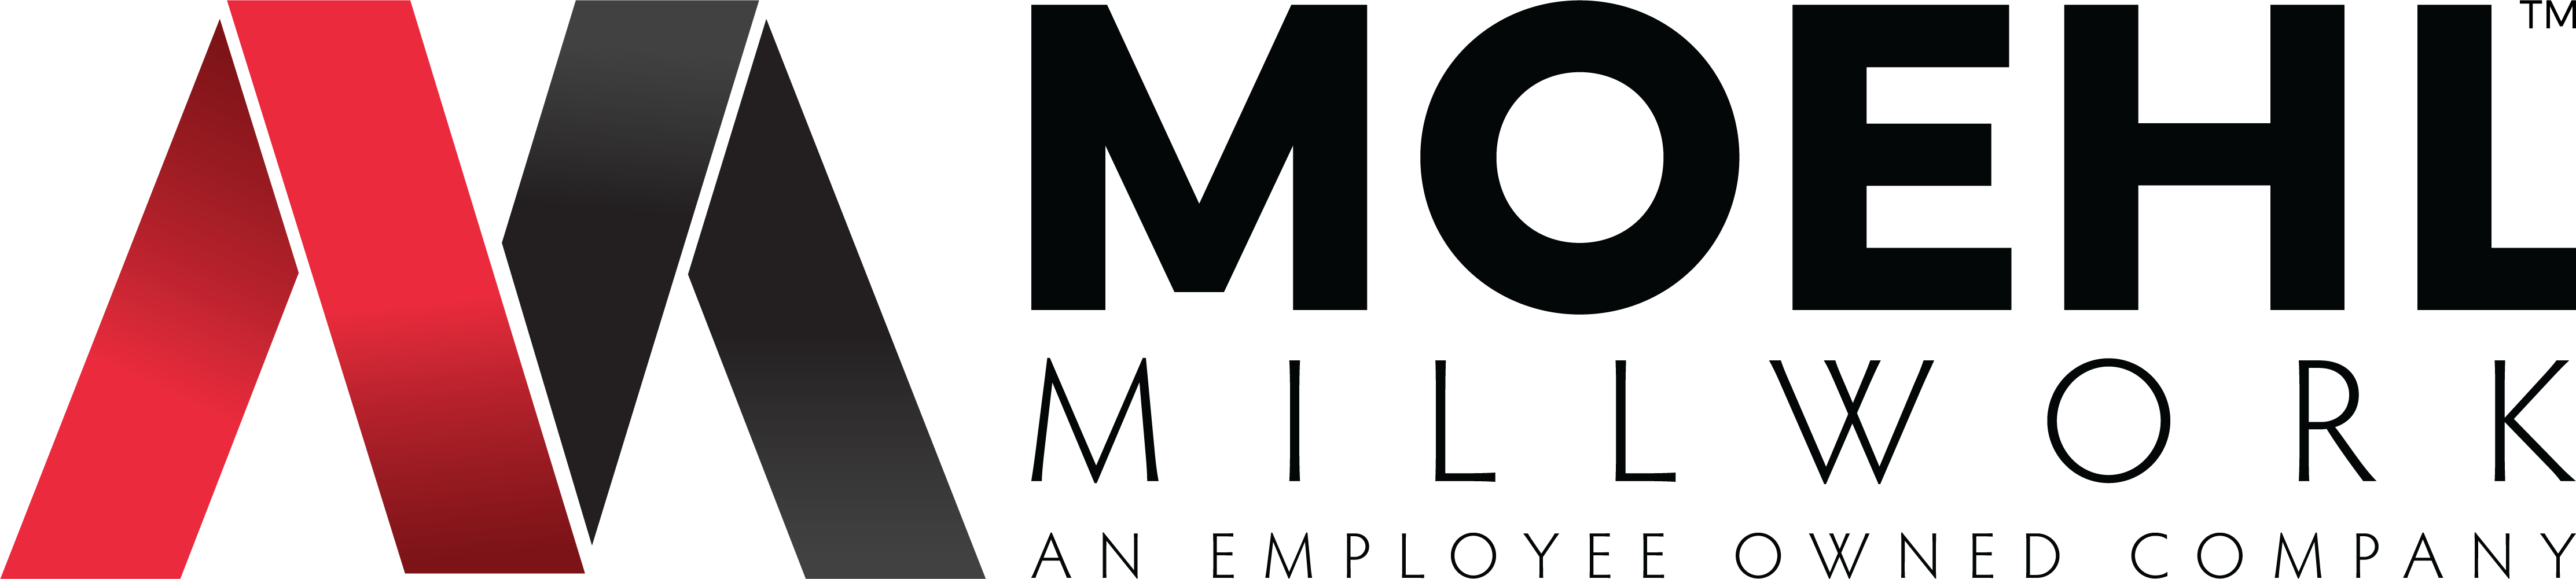 Moehl-Logo-HORIZONTAL-Full-Color